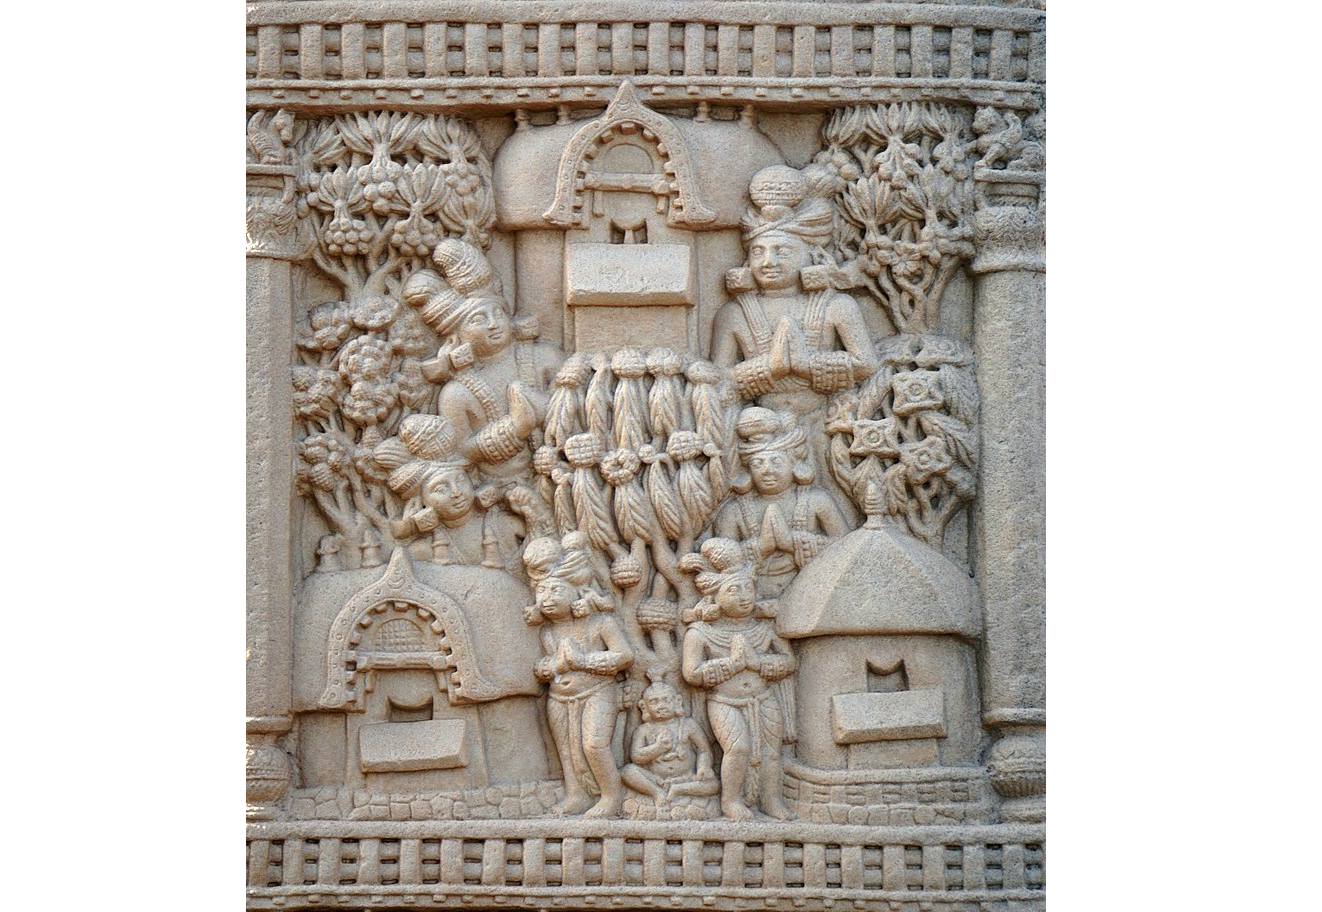 The Jetavana at Shravasti as depicted at Sanchi